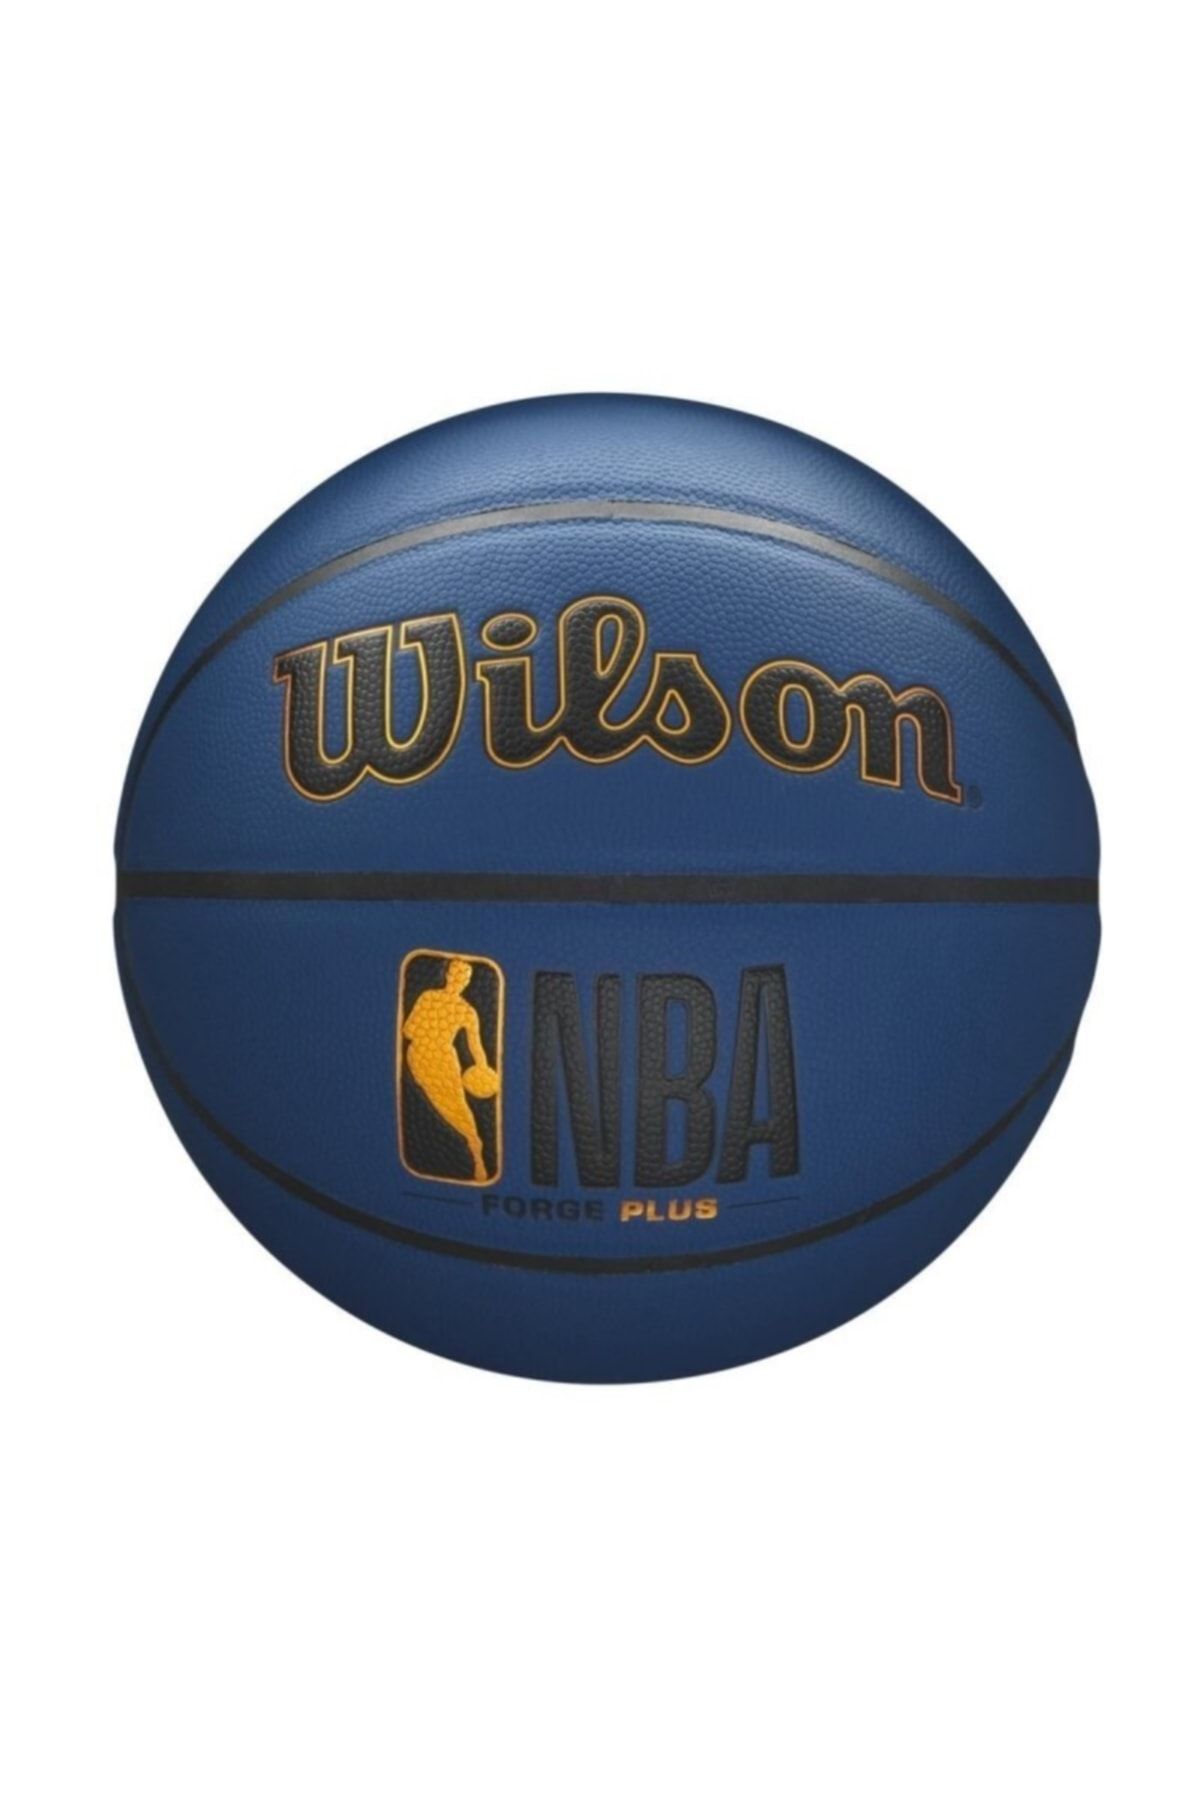 Wilson Nba Forge Plus Basketbol Topu Deep Navy 7 Numara Sz7 Wtb8102xb07